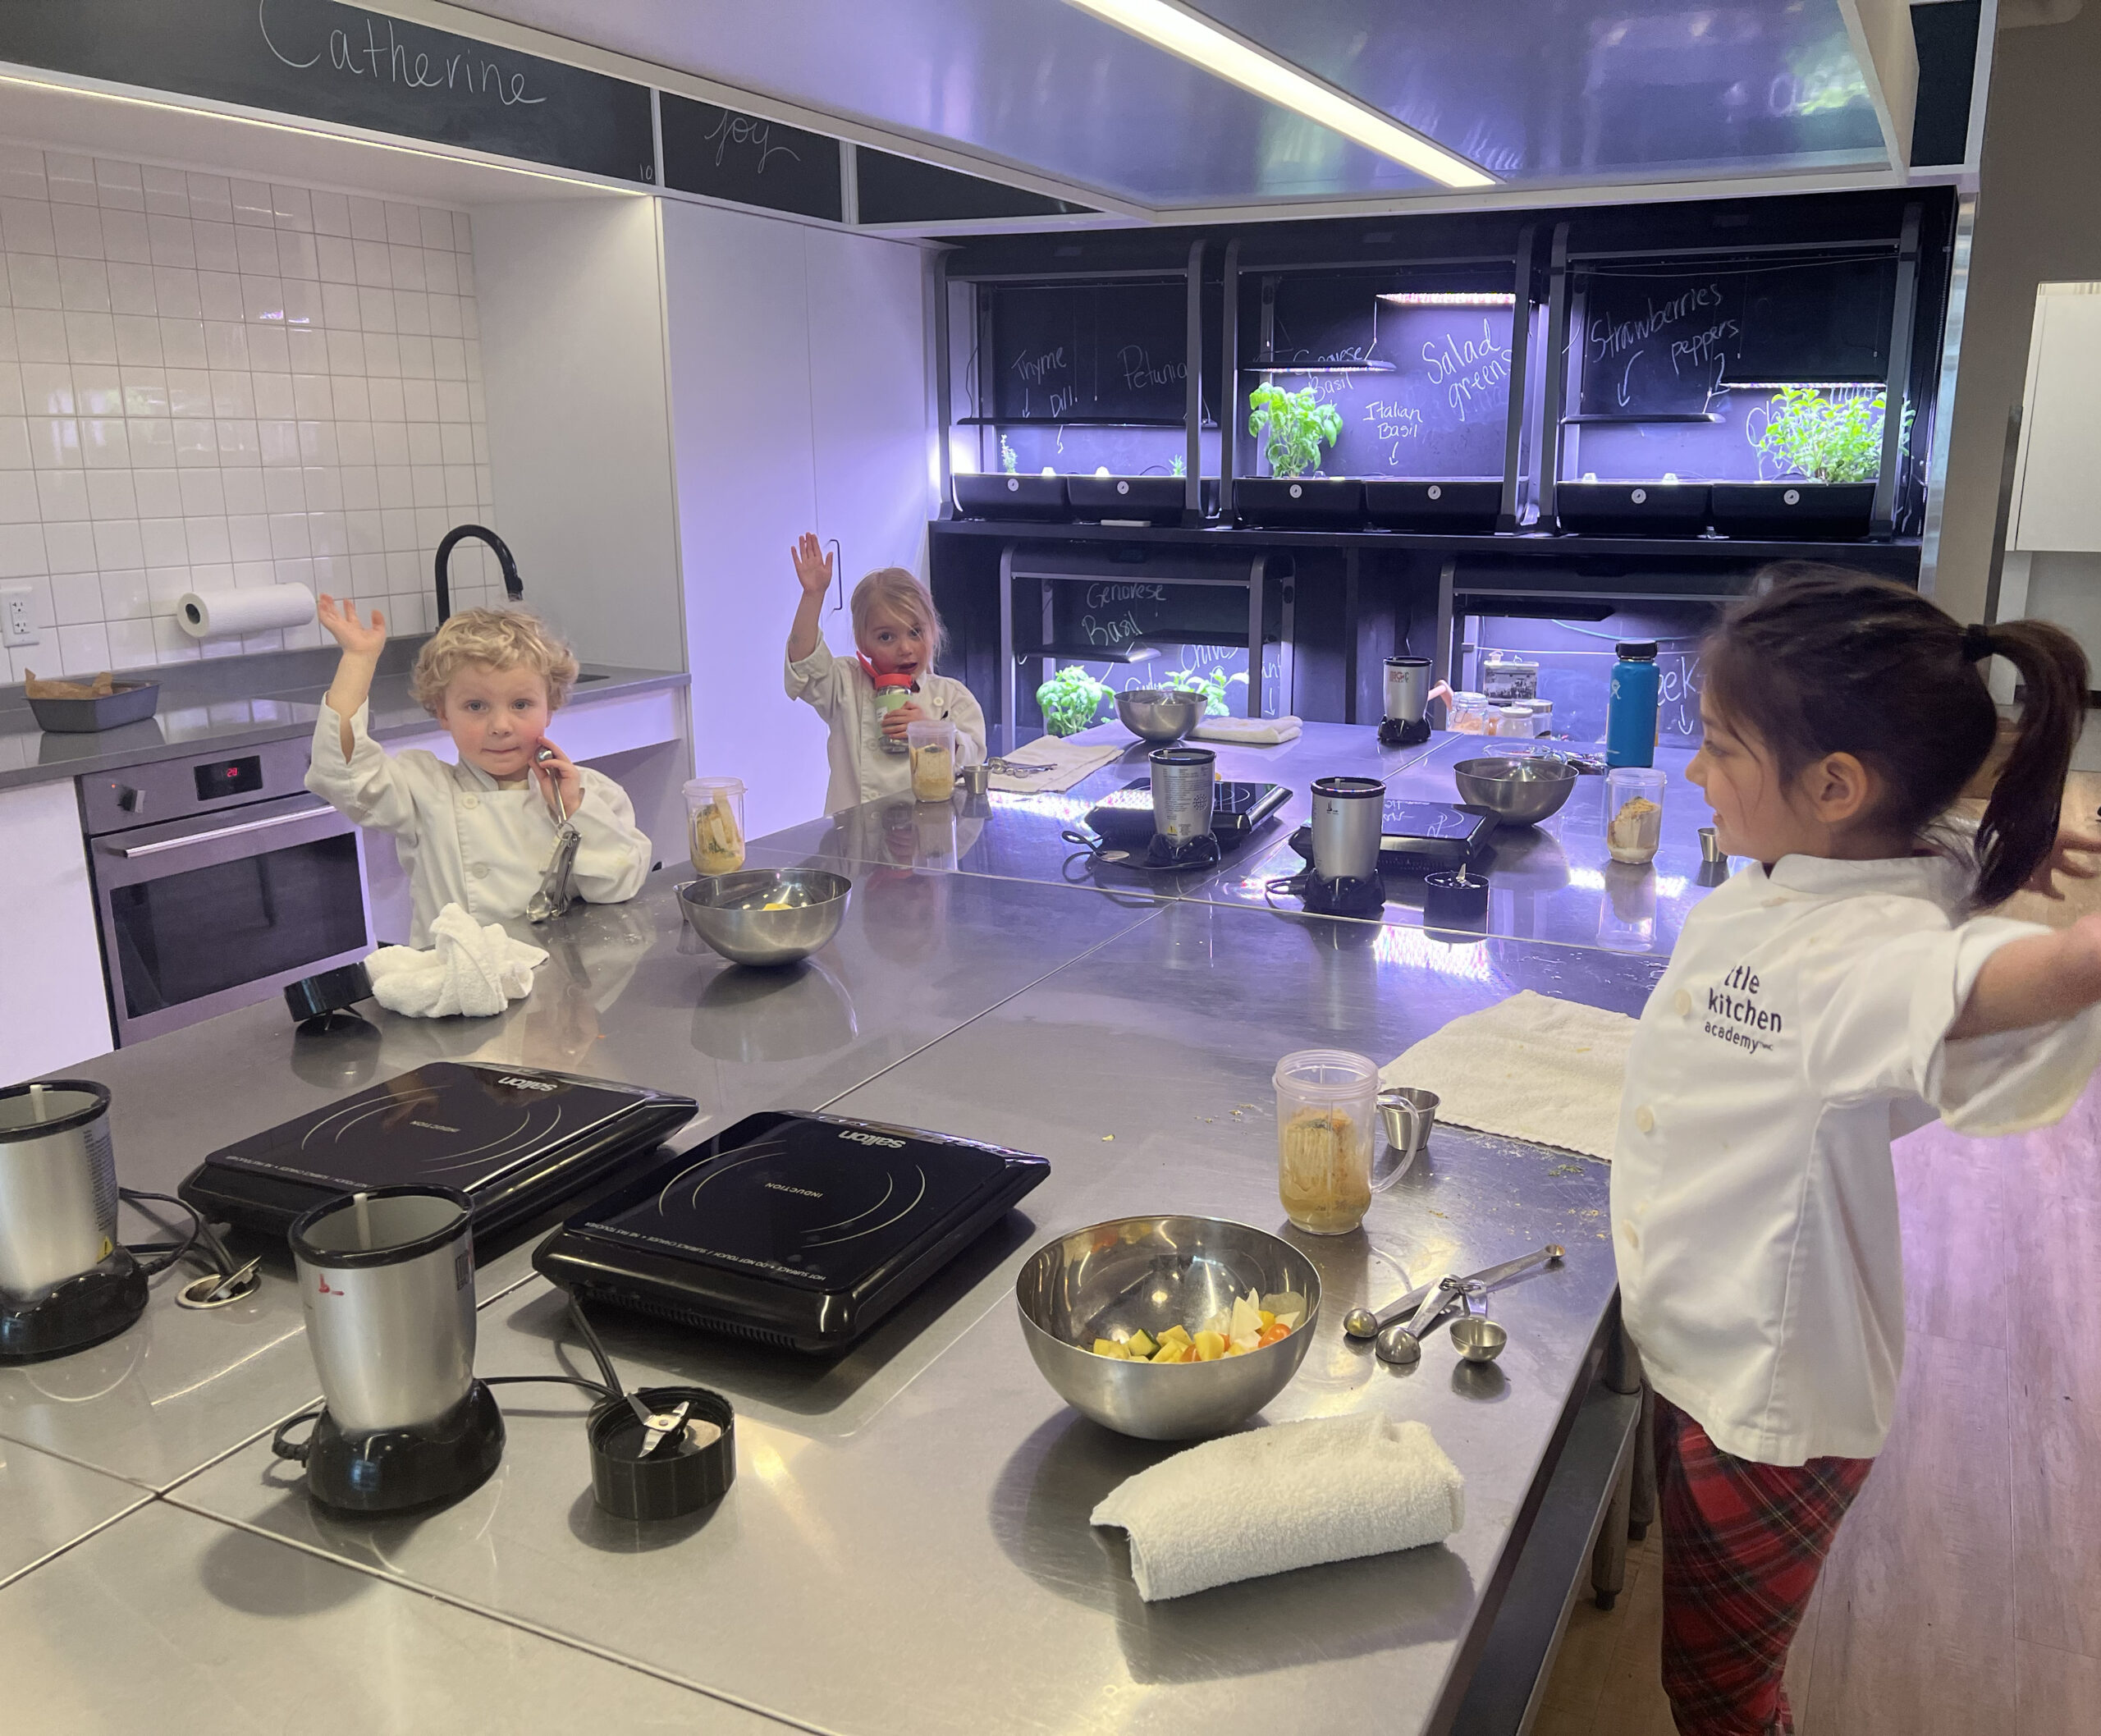 Q&A: Little Kitchen Academy - L.A. Parent